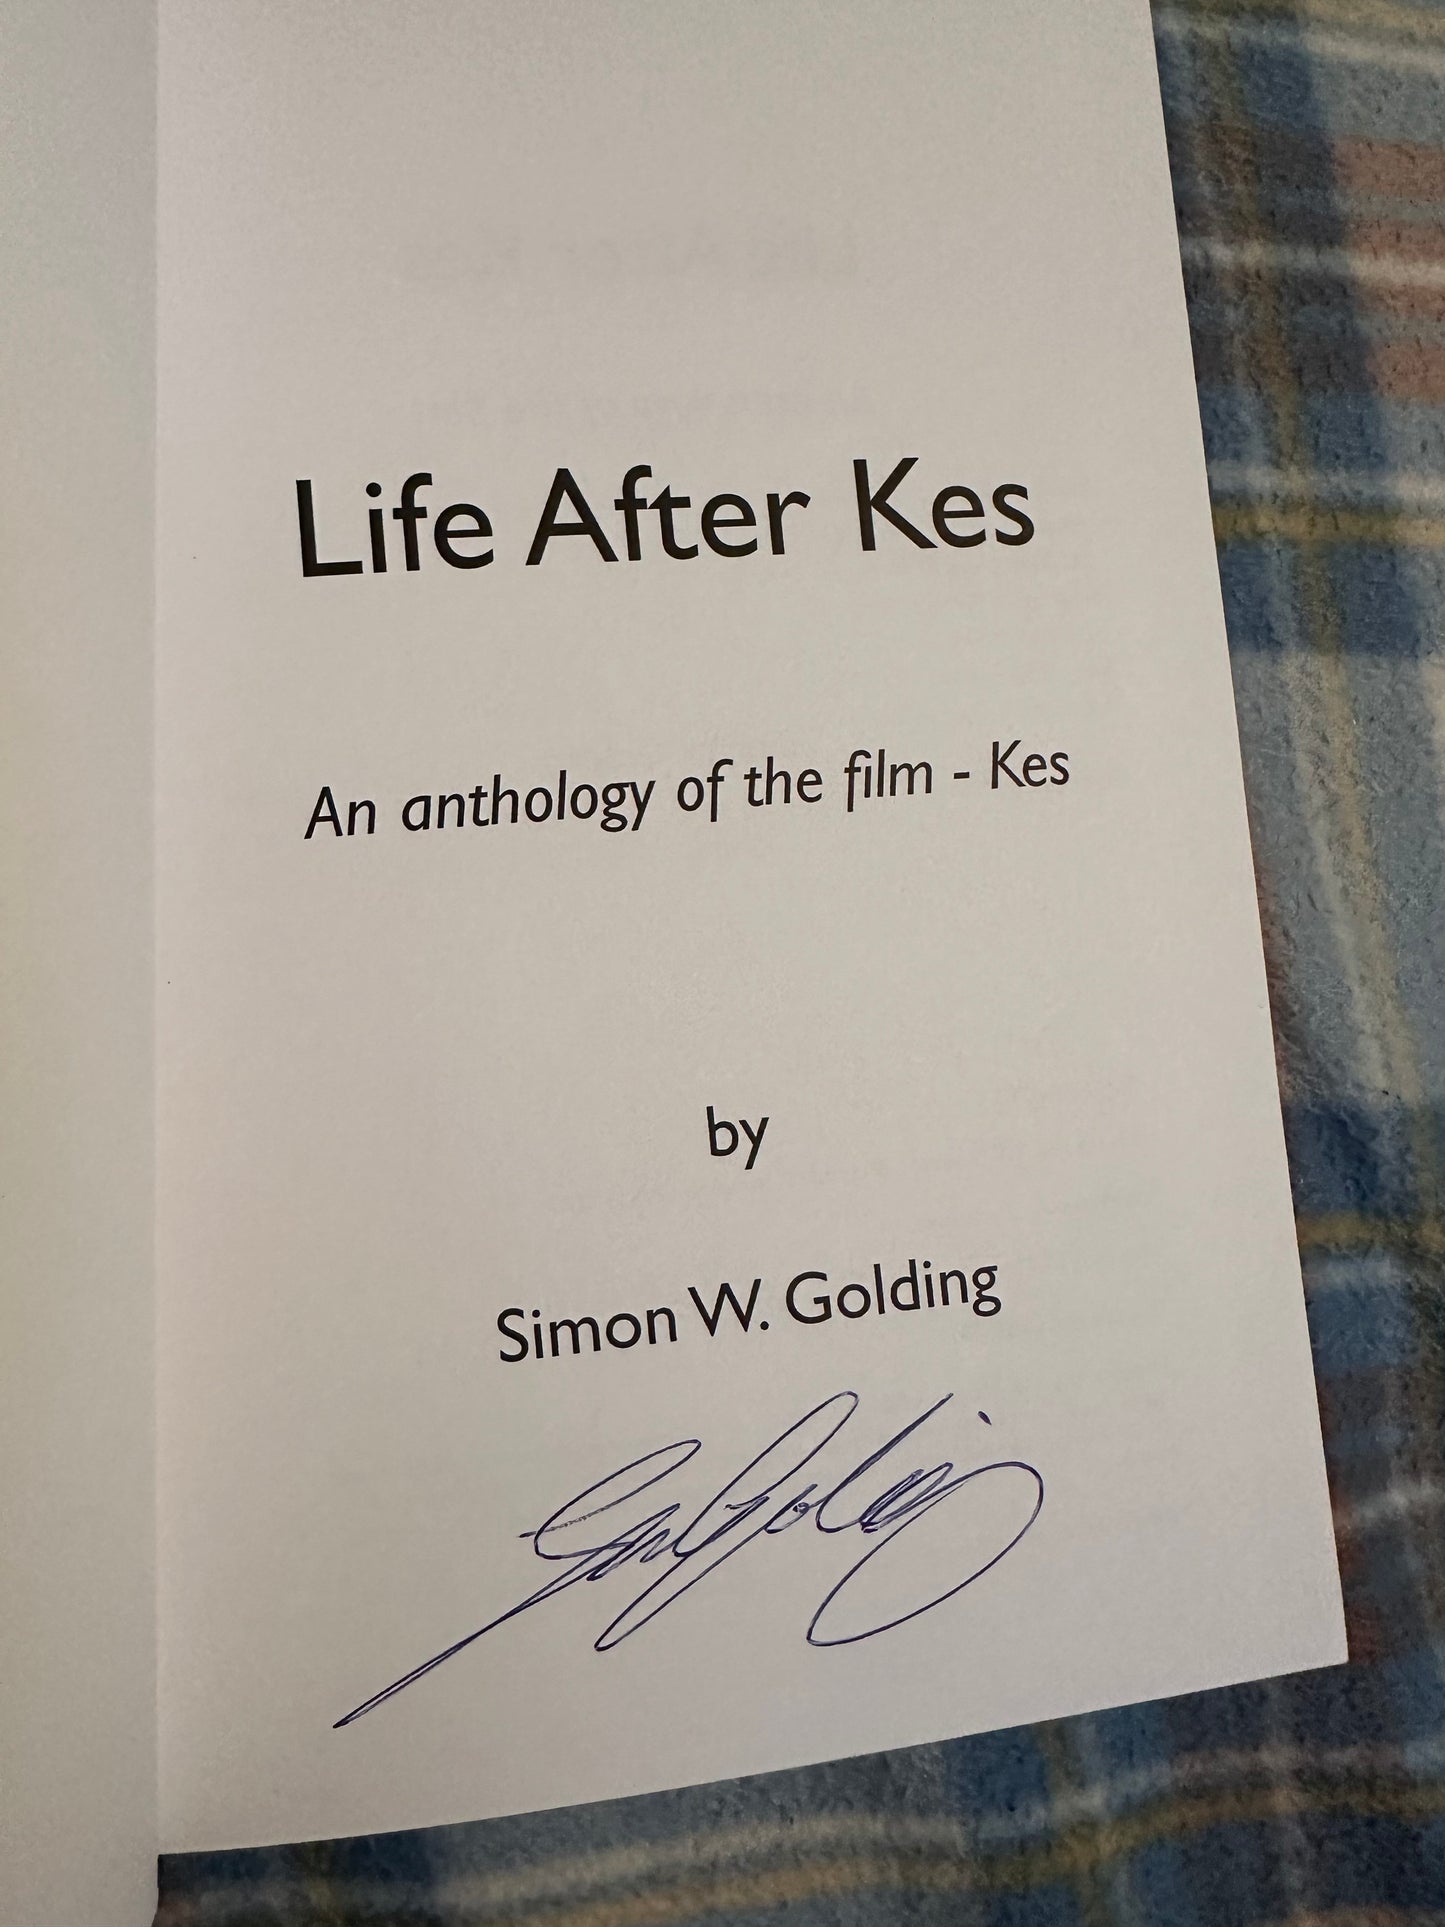 2005*1st Signed* Life After Kes - Simon W. Golding (GET Publishing)